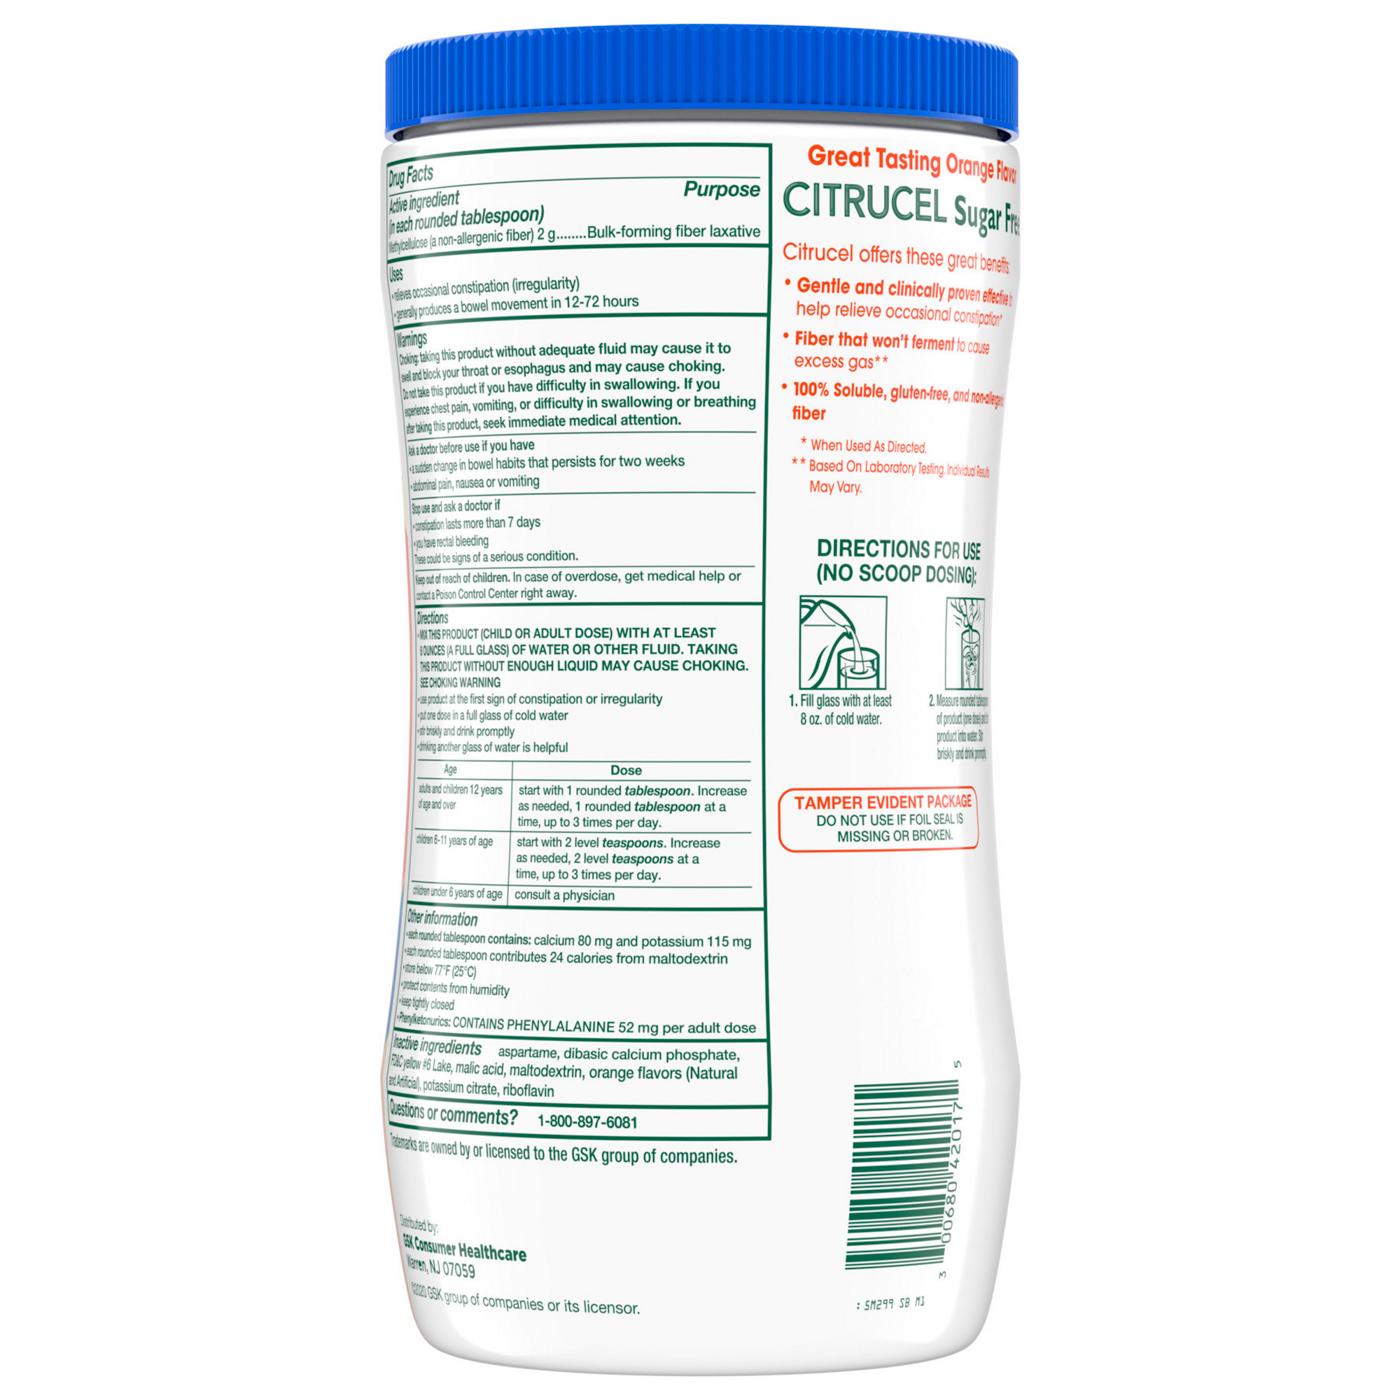 Citrucel Sugar Free Orange Methylcellulose Fiber Therapy Powder; image 7 of 8